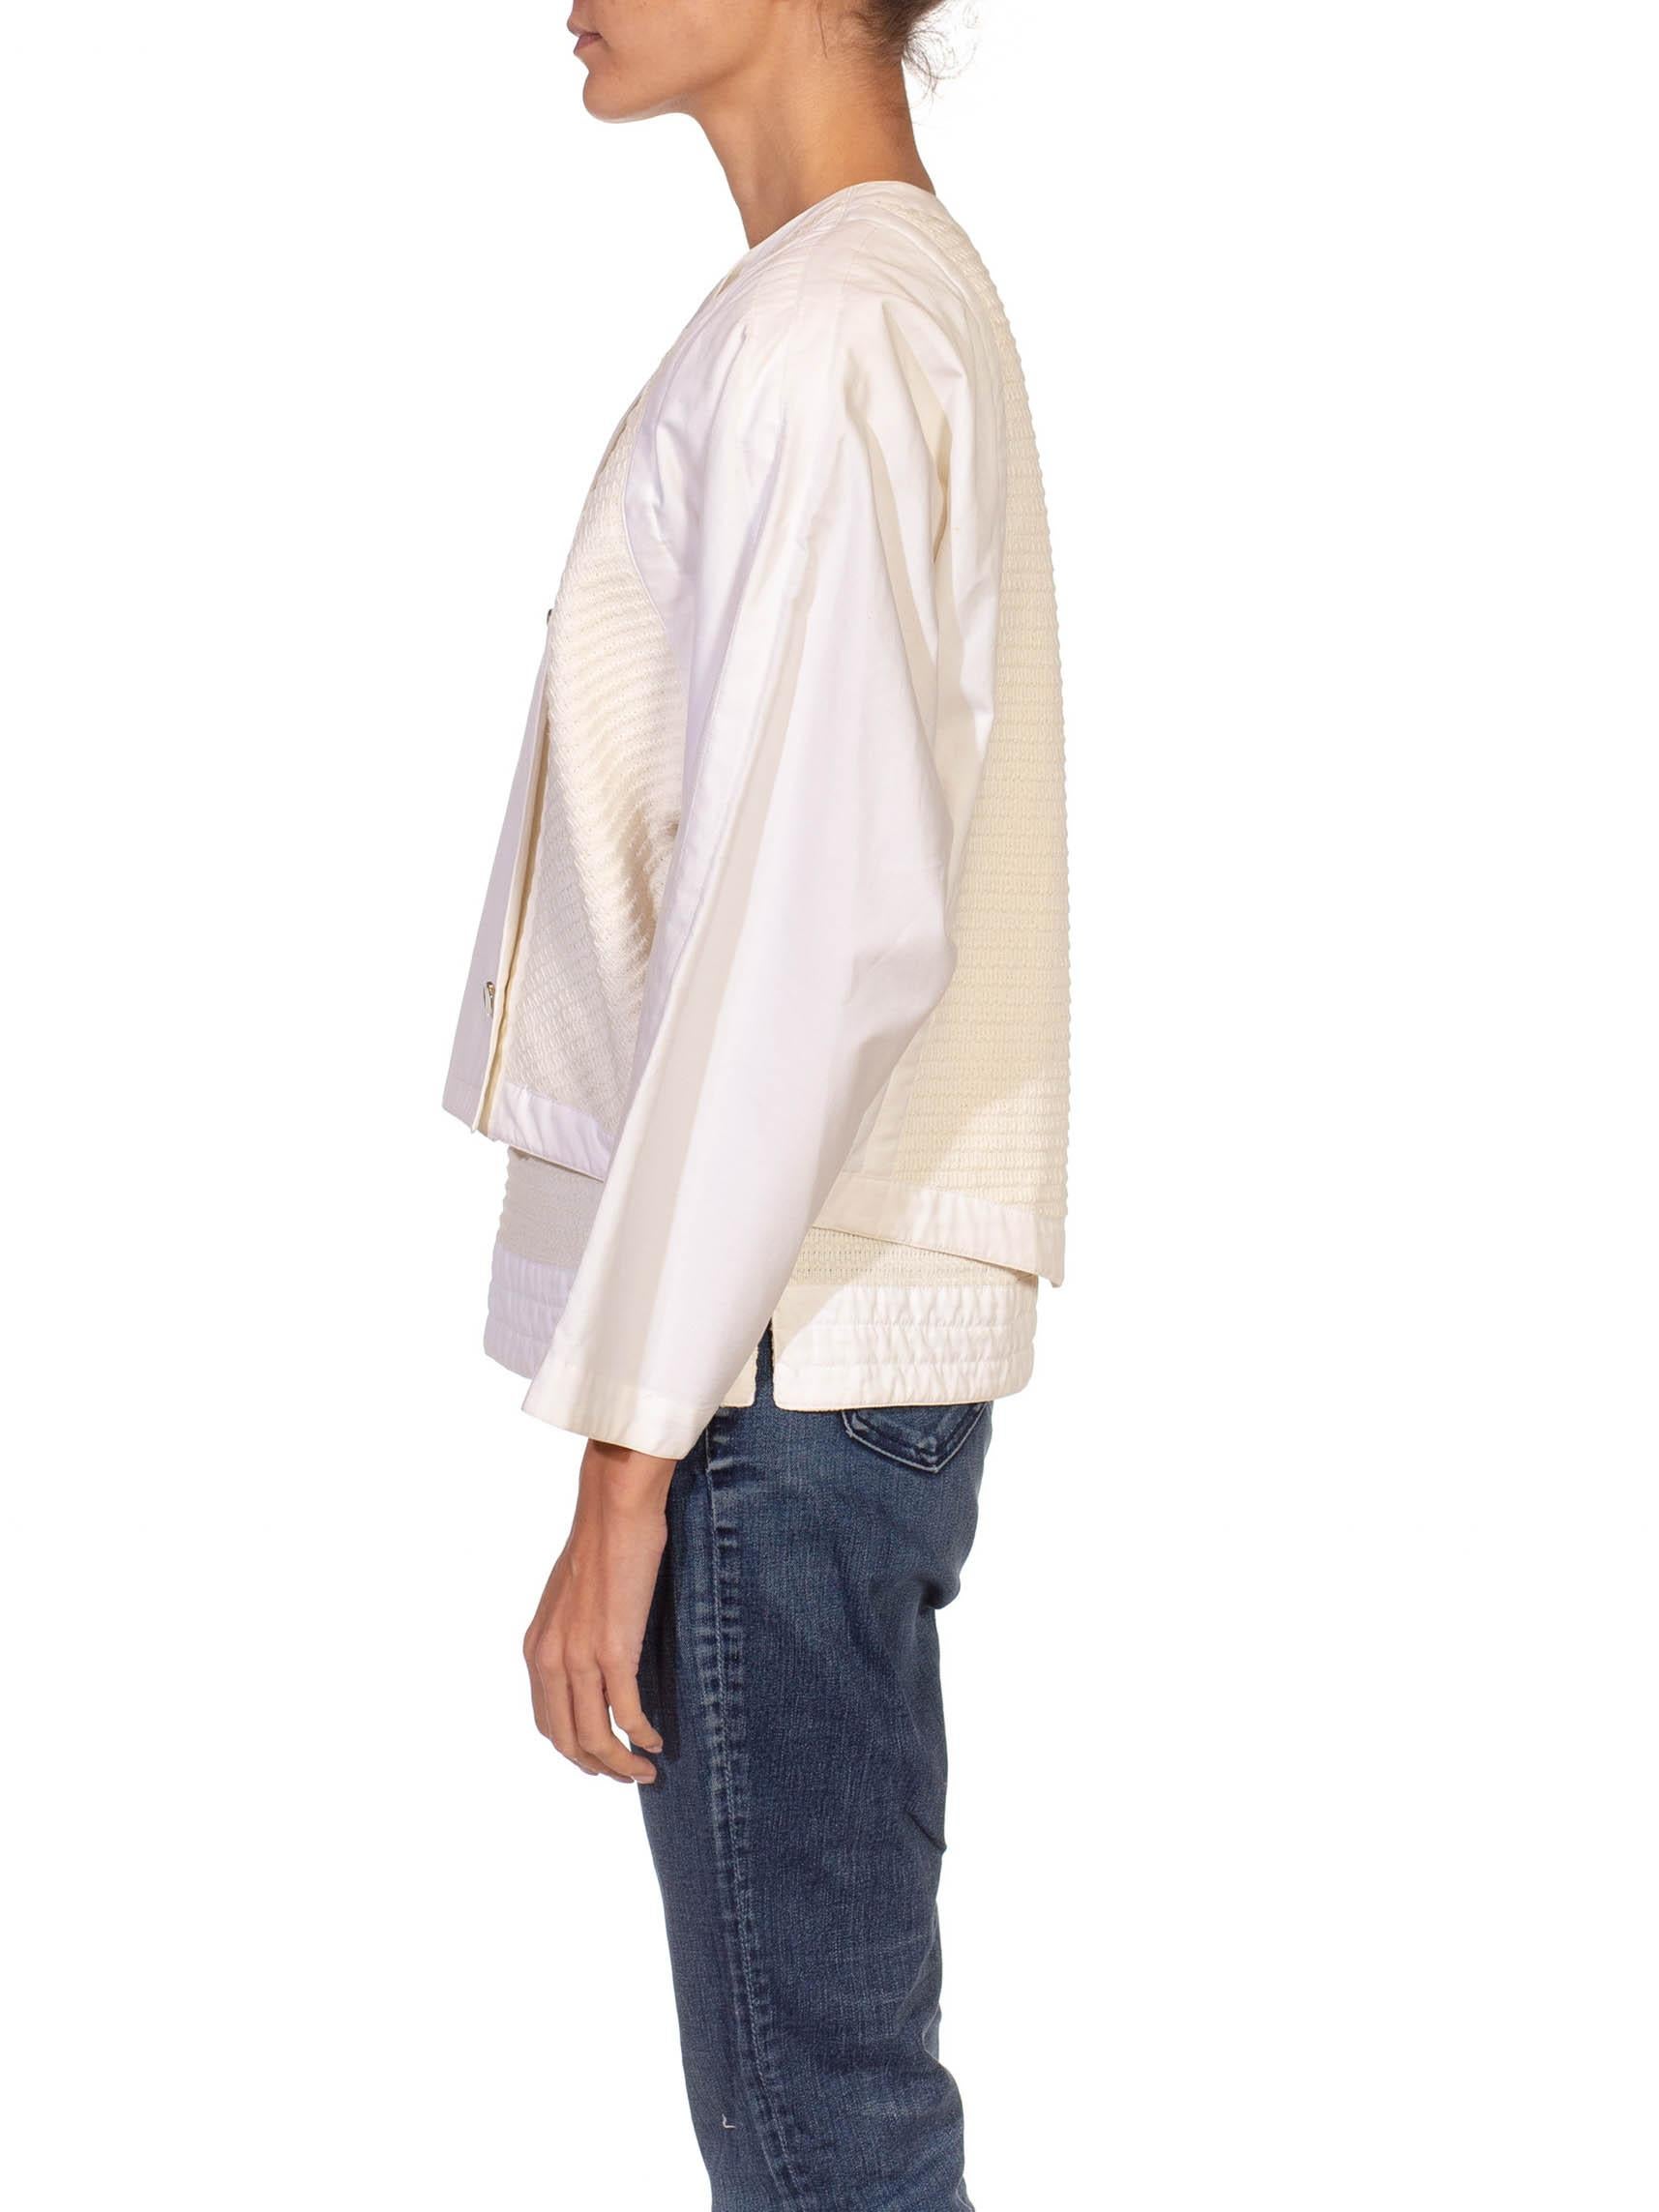 Women's 1980S Gianni Versace White Cotton Textured Top & Jacket Ensemble For Sale